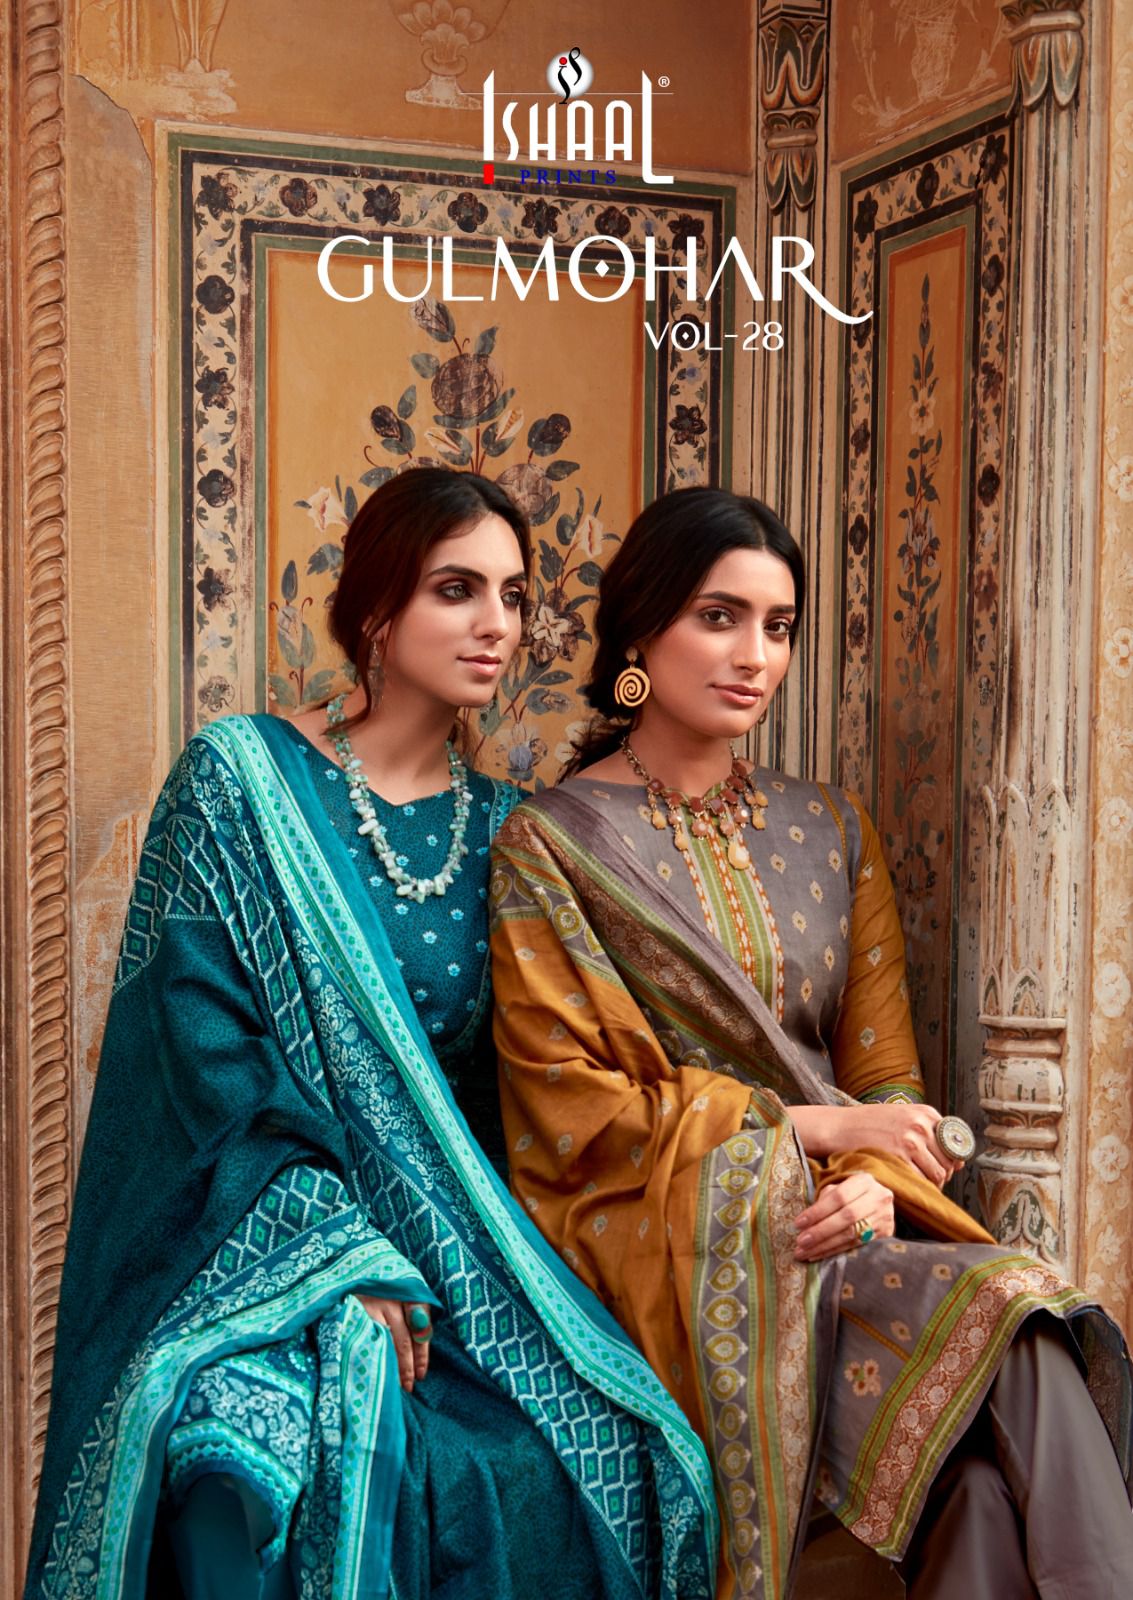 Gulmohar Vol 28 Ishaal Prints Lawn Karachi Salwar Suits